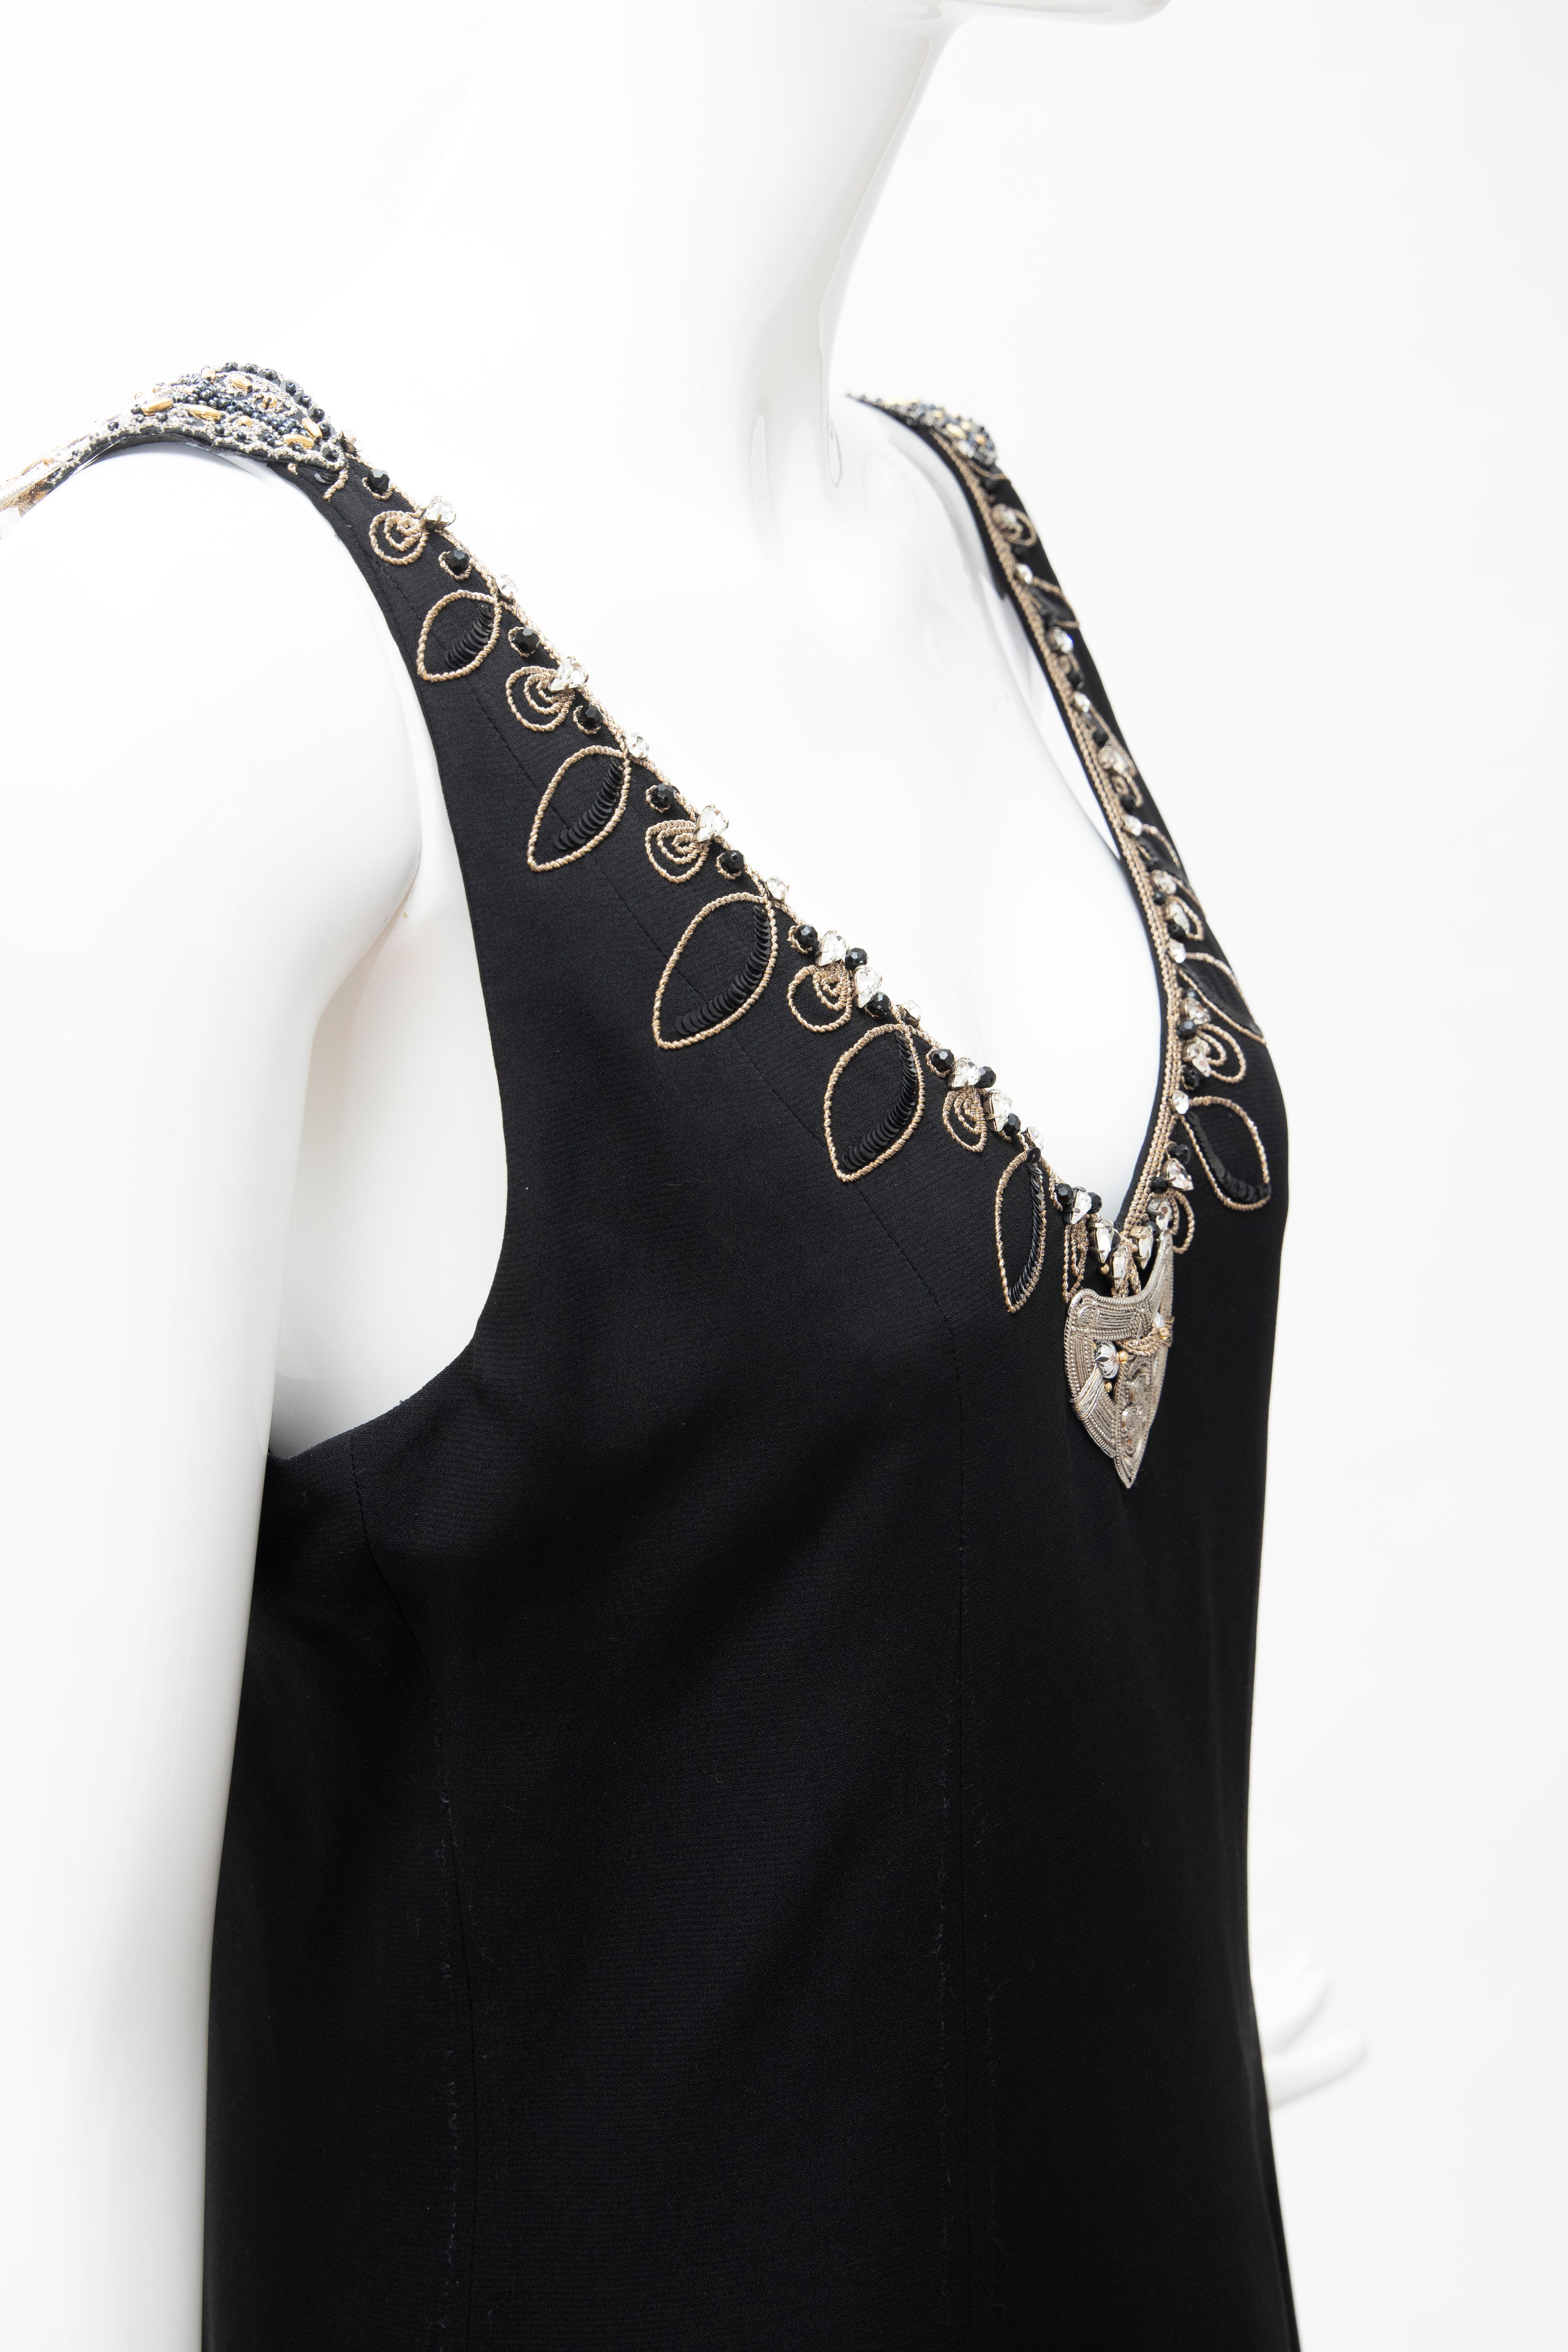 Christian Dior Gianfranco Ferré Numbered Black Embroidered Dress Ensemble, 1991 11